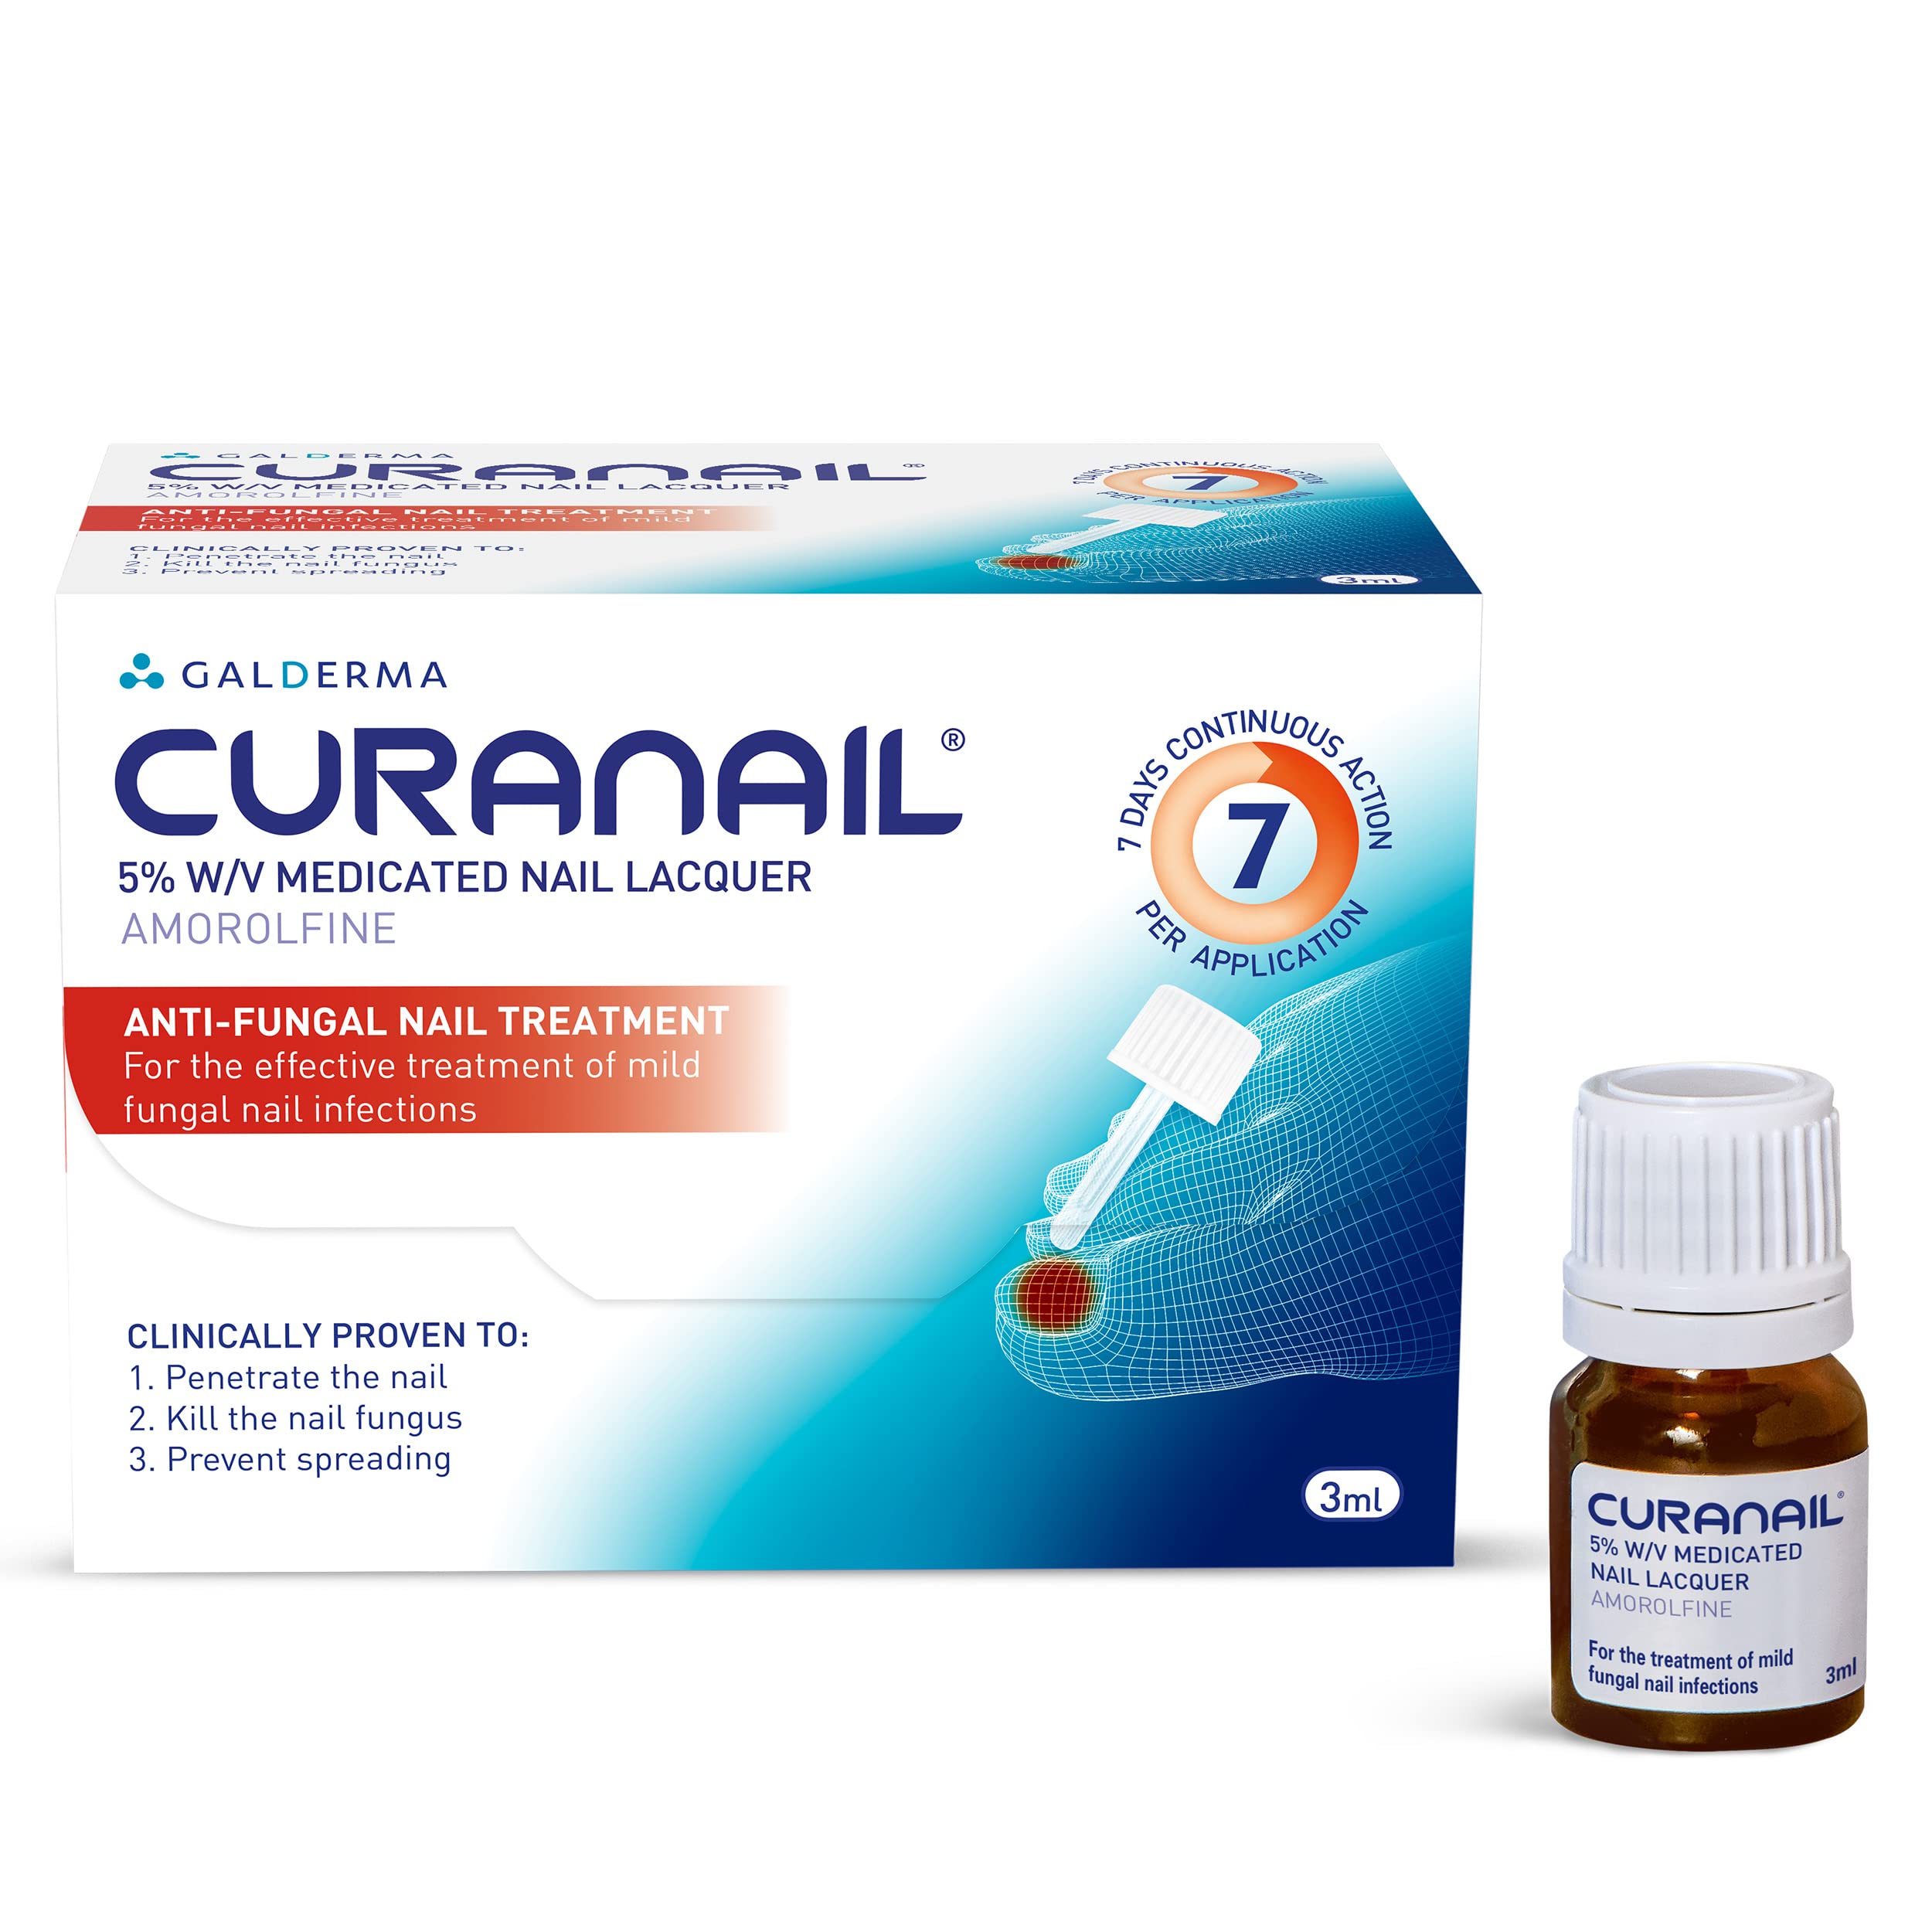 5 Best AntiFungal Nail Polish For Fungus Treatments